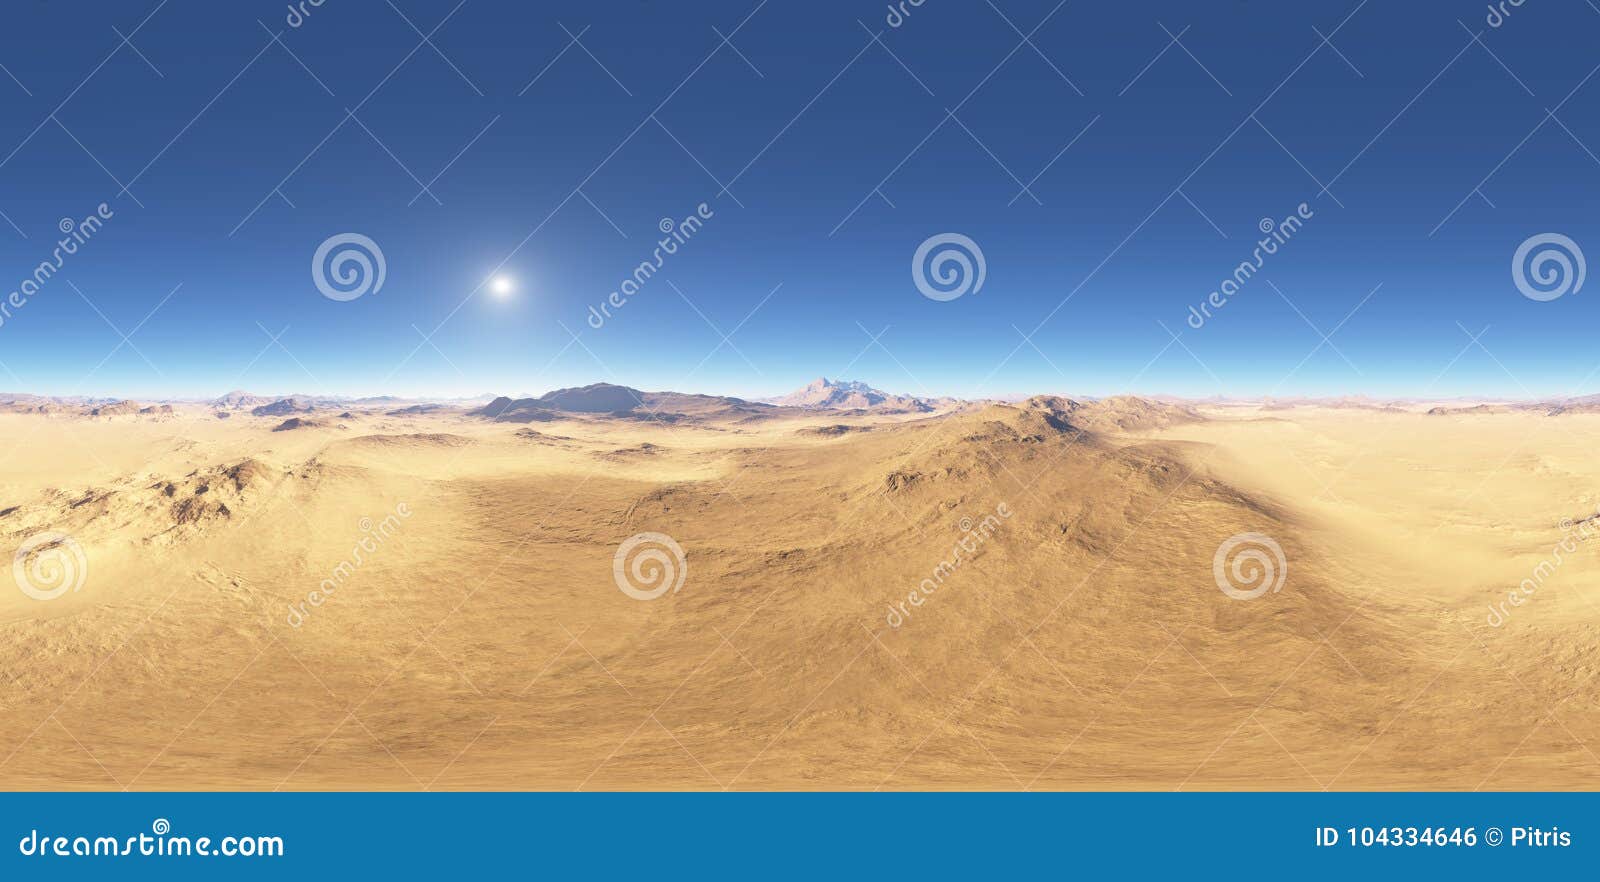 panorama of desert landscape sunset, environment hdri map. equirectangular projection, spherical panorama